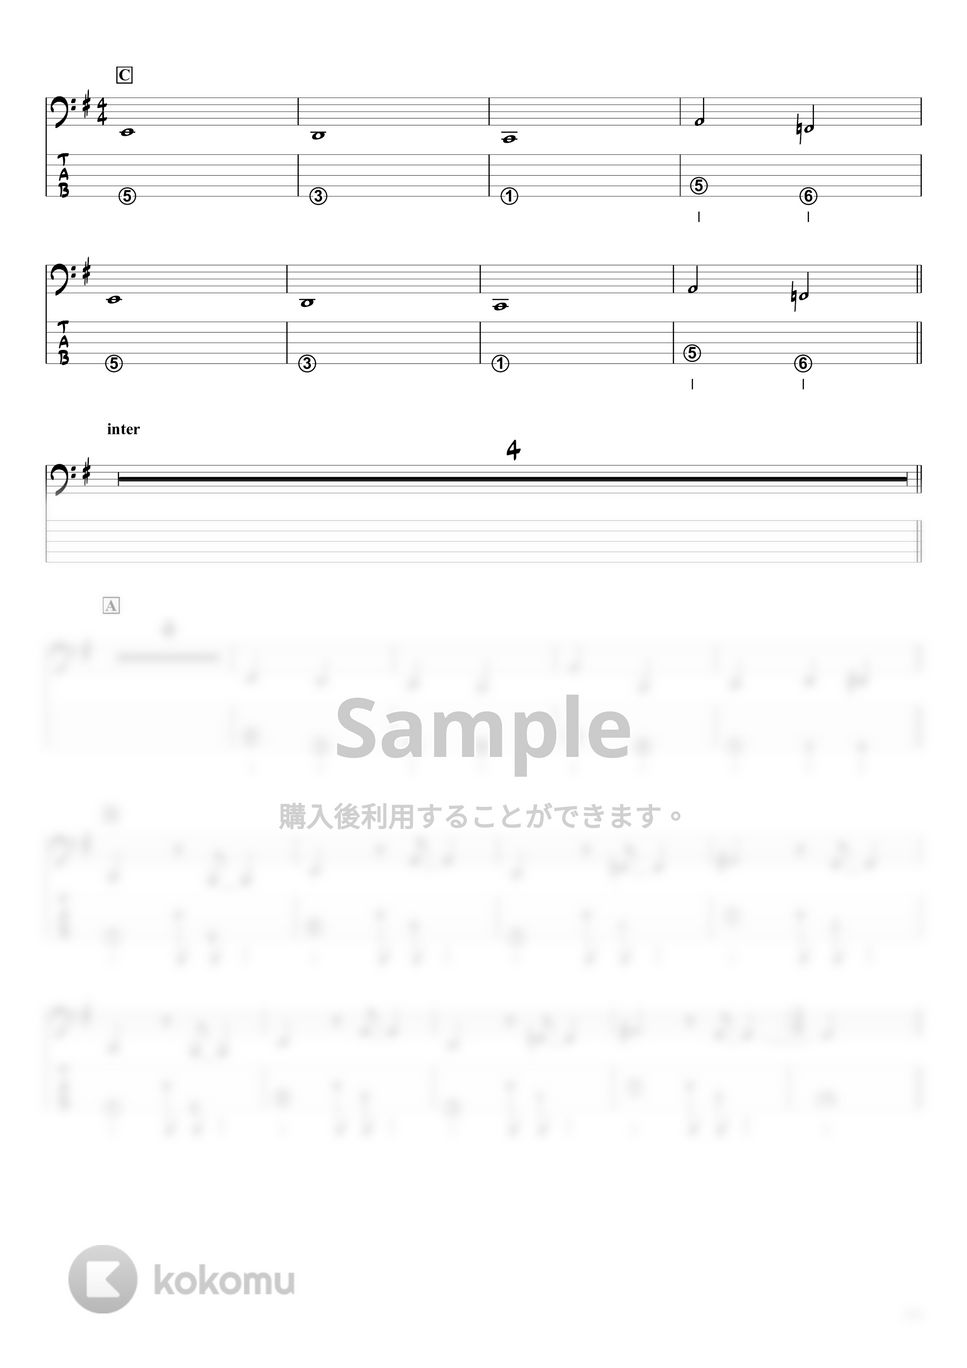 King Gnu - 三文小説 (『ベースTAB譜』☆5弦ベース対応) by swbass